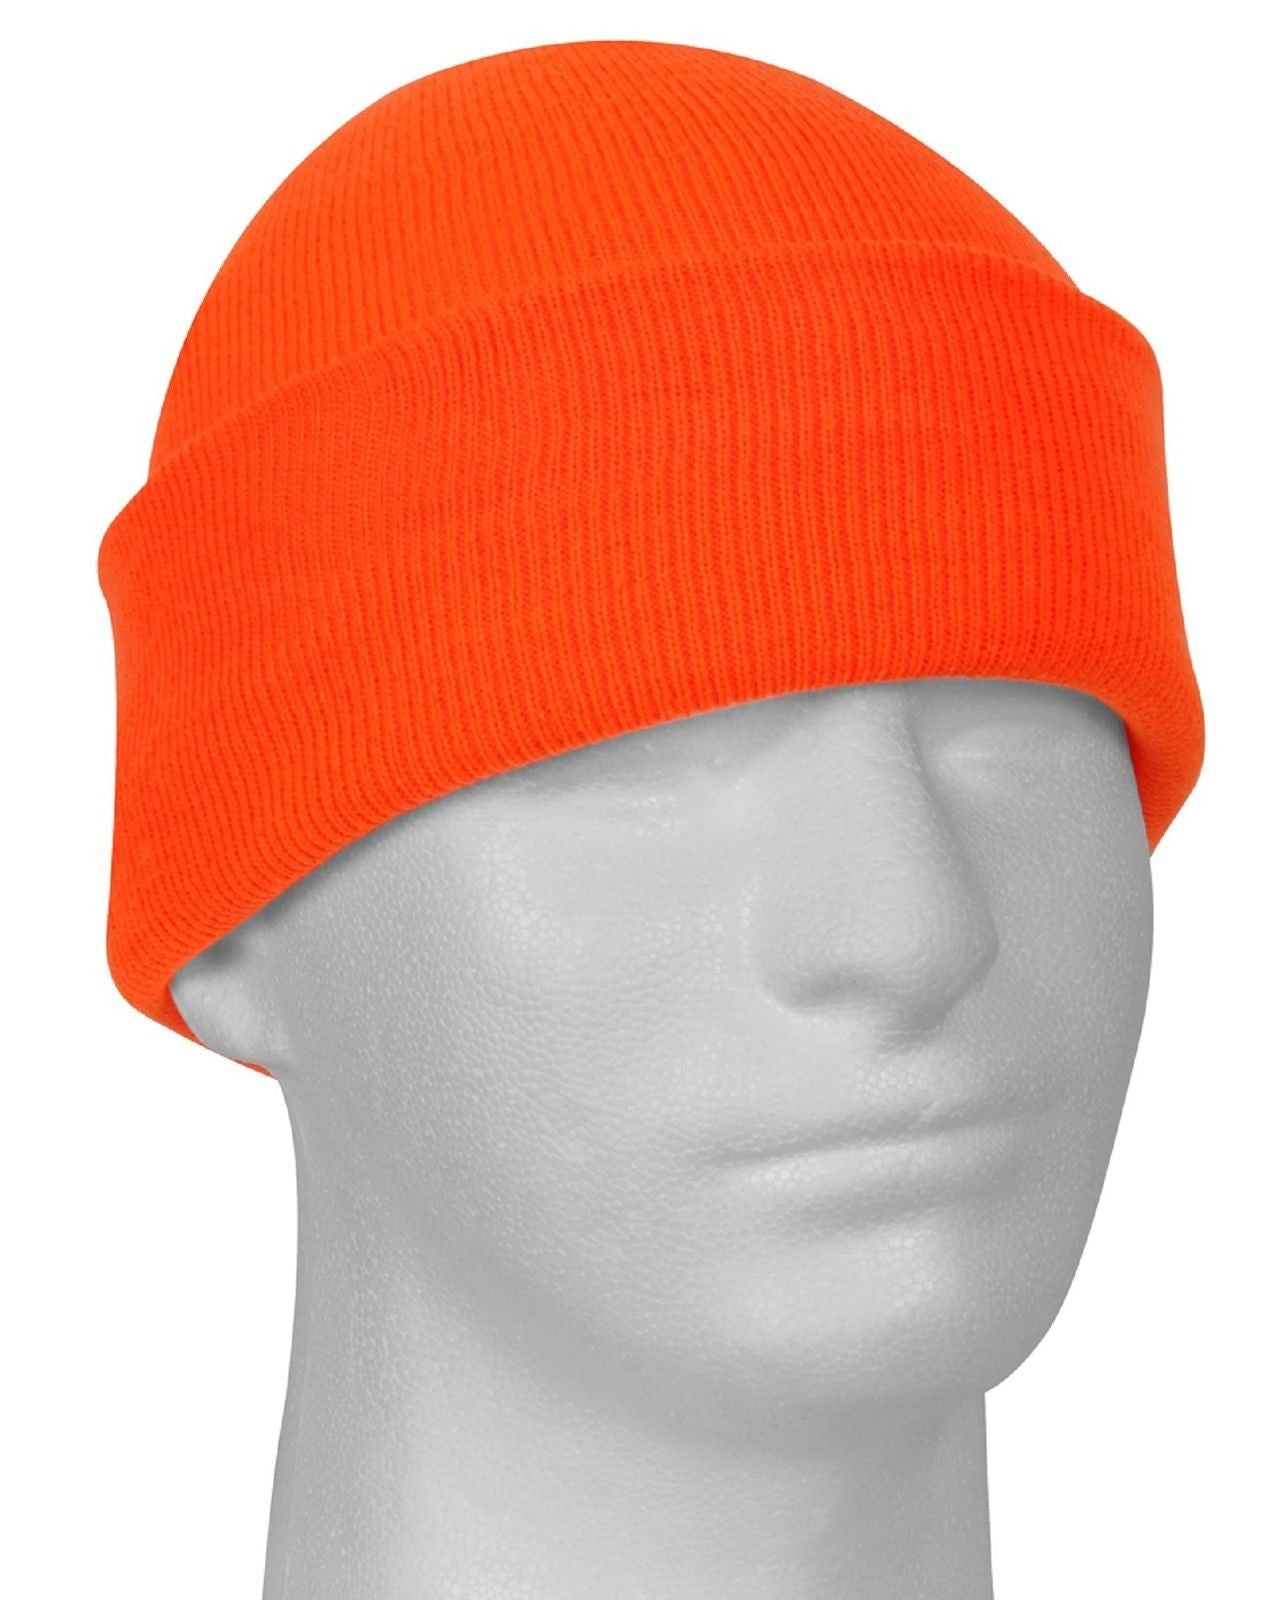 Safety Orange High Visibility Acrylic Winter Ski Watch Cap - Rothco 5783